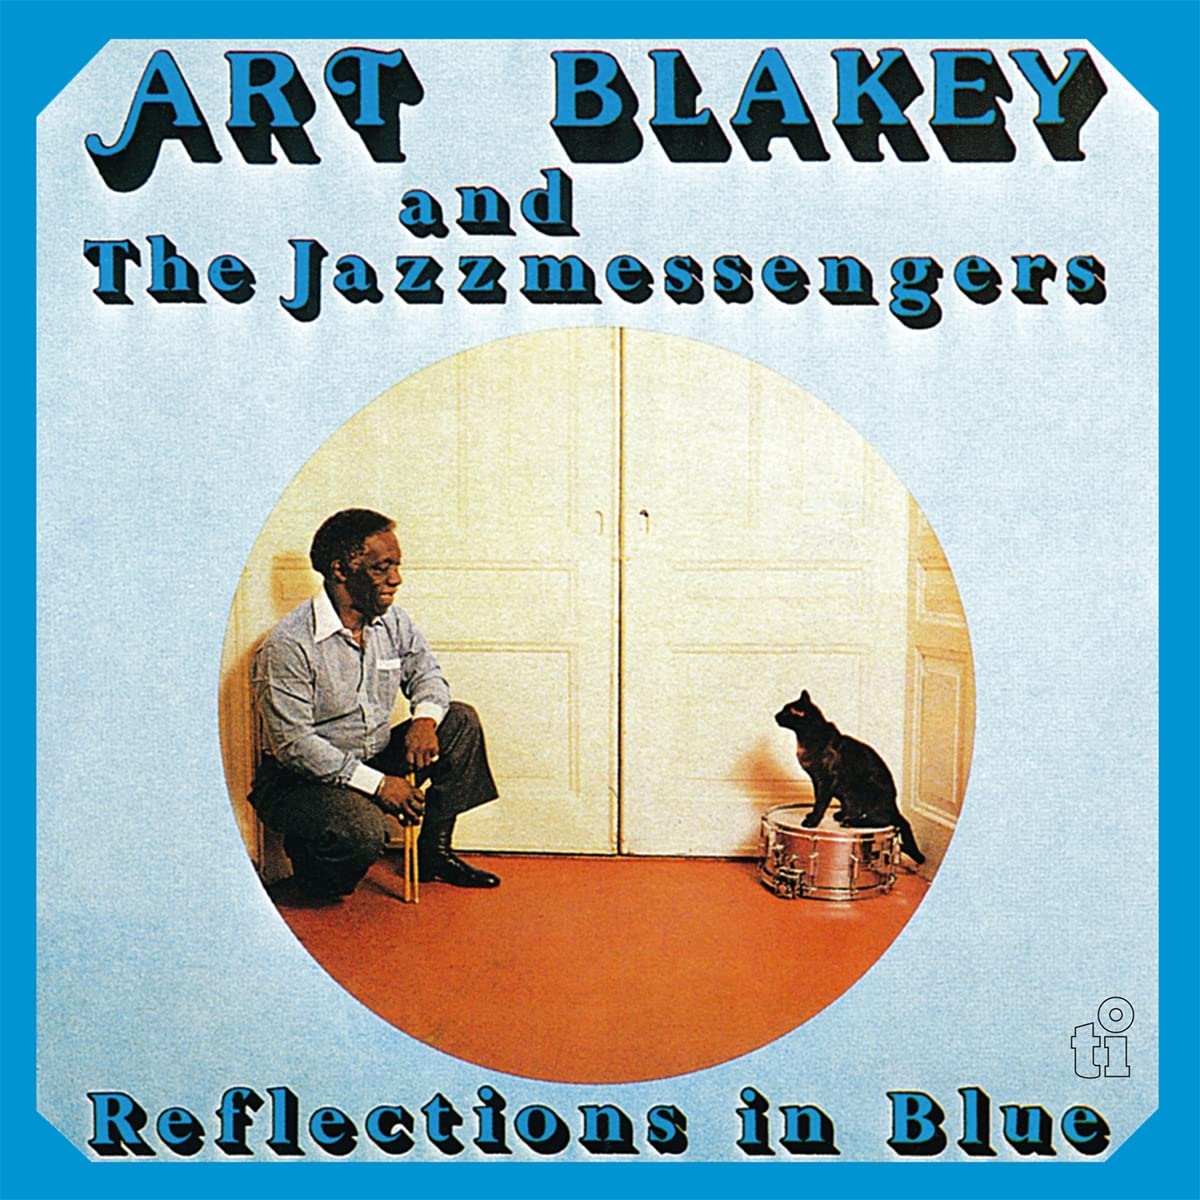 Джаз Music On Vinyl Art Blakey And The Jazzmessengers - Reflections In Blue (Coloured Vinyl LP) поп bomba music михаил круг я прошел сибирь blue vinyl 2lp